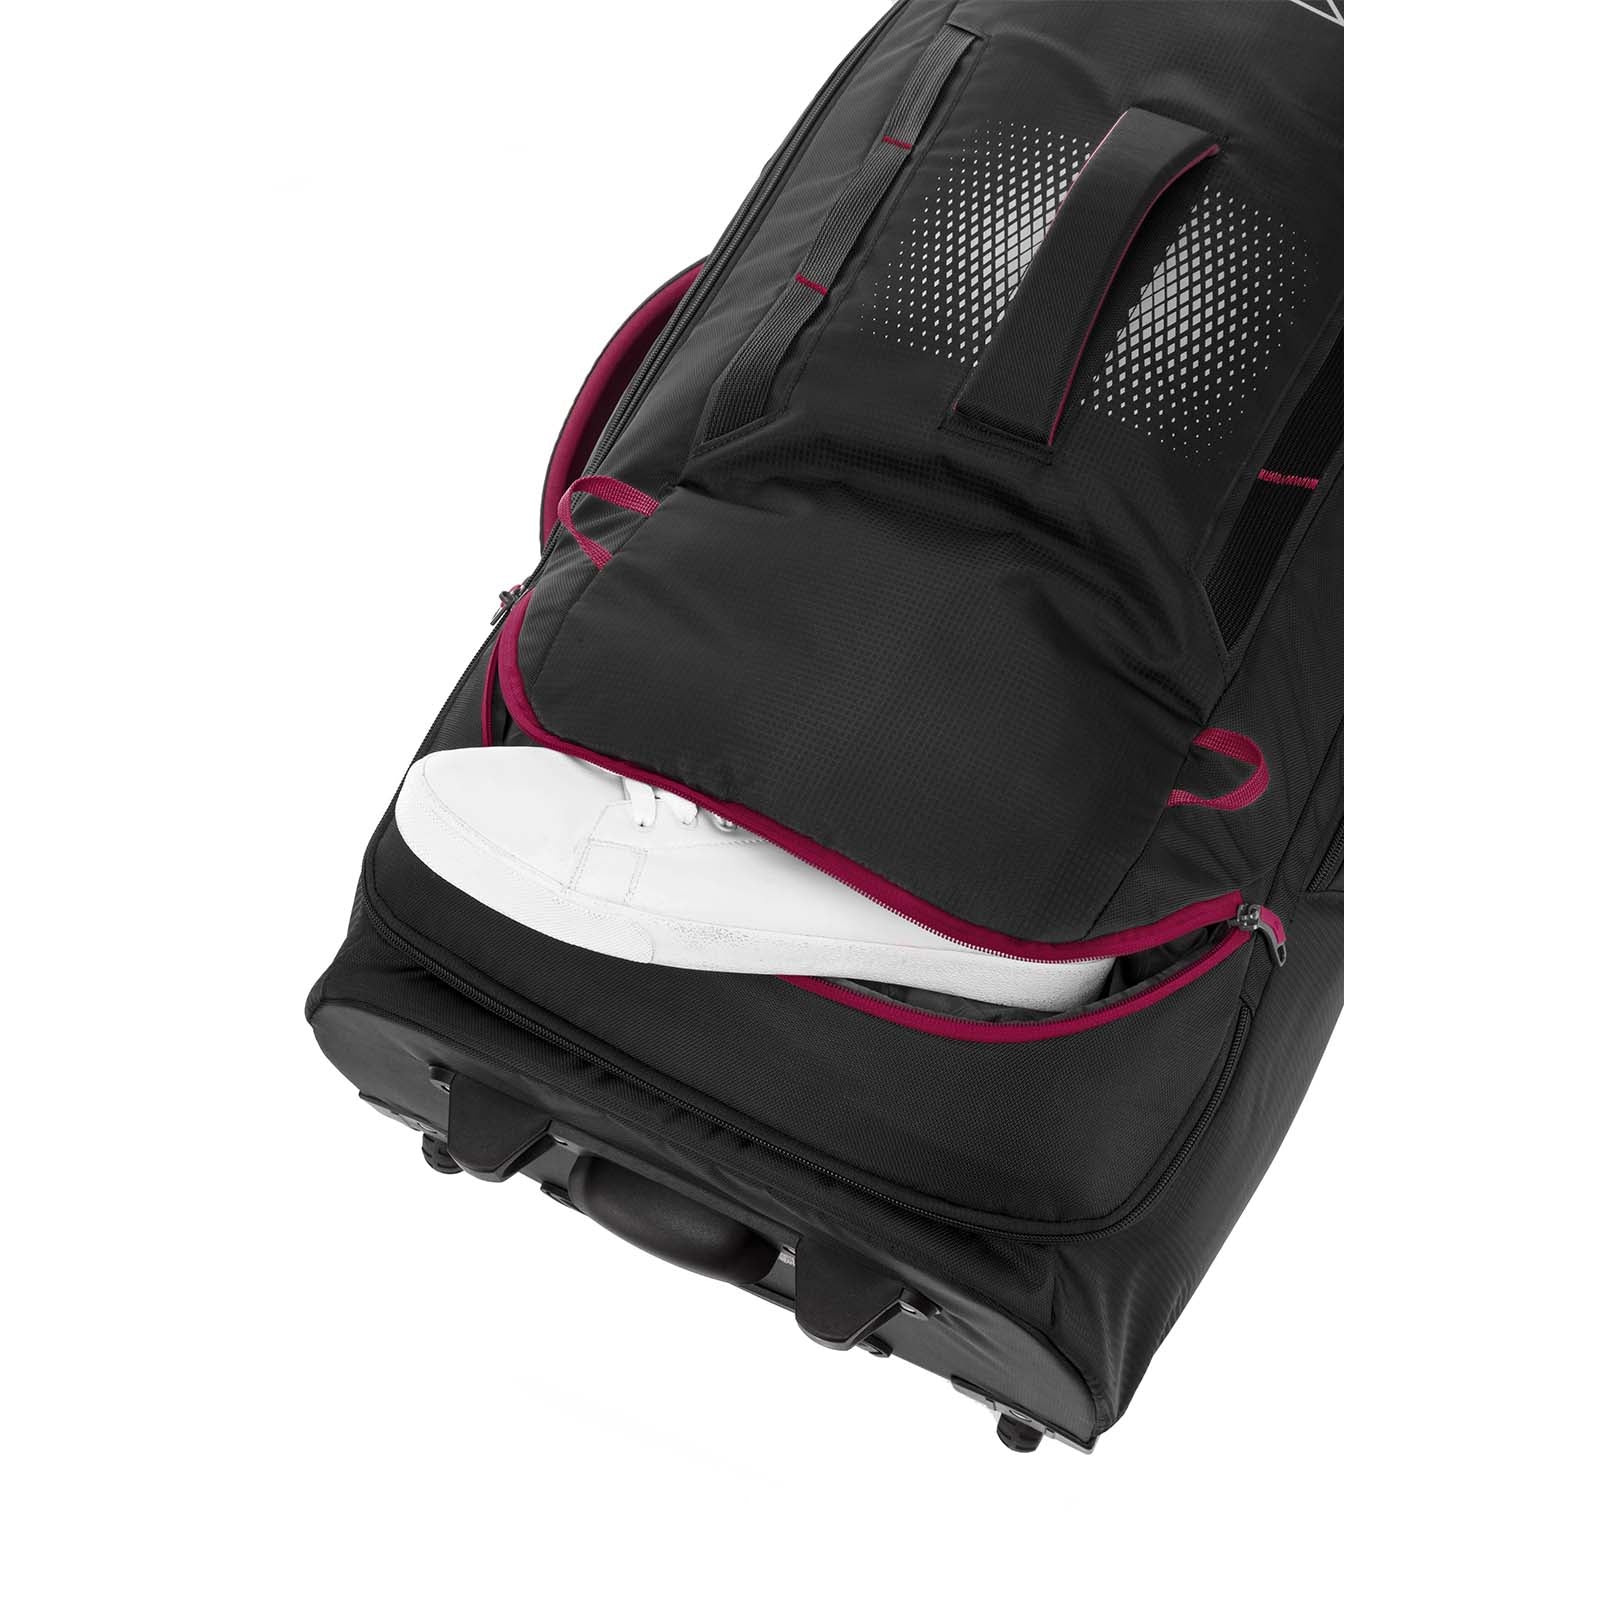    High_Sierra_Composite_V4_56cm_Carry-On_Wheeled_Duffel_Black_Red_Shoe_Bag